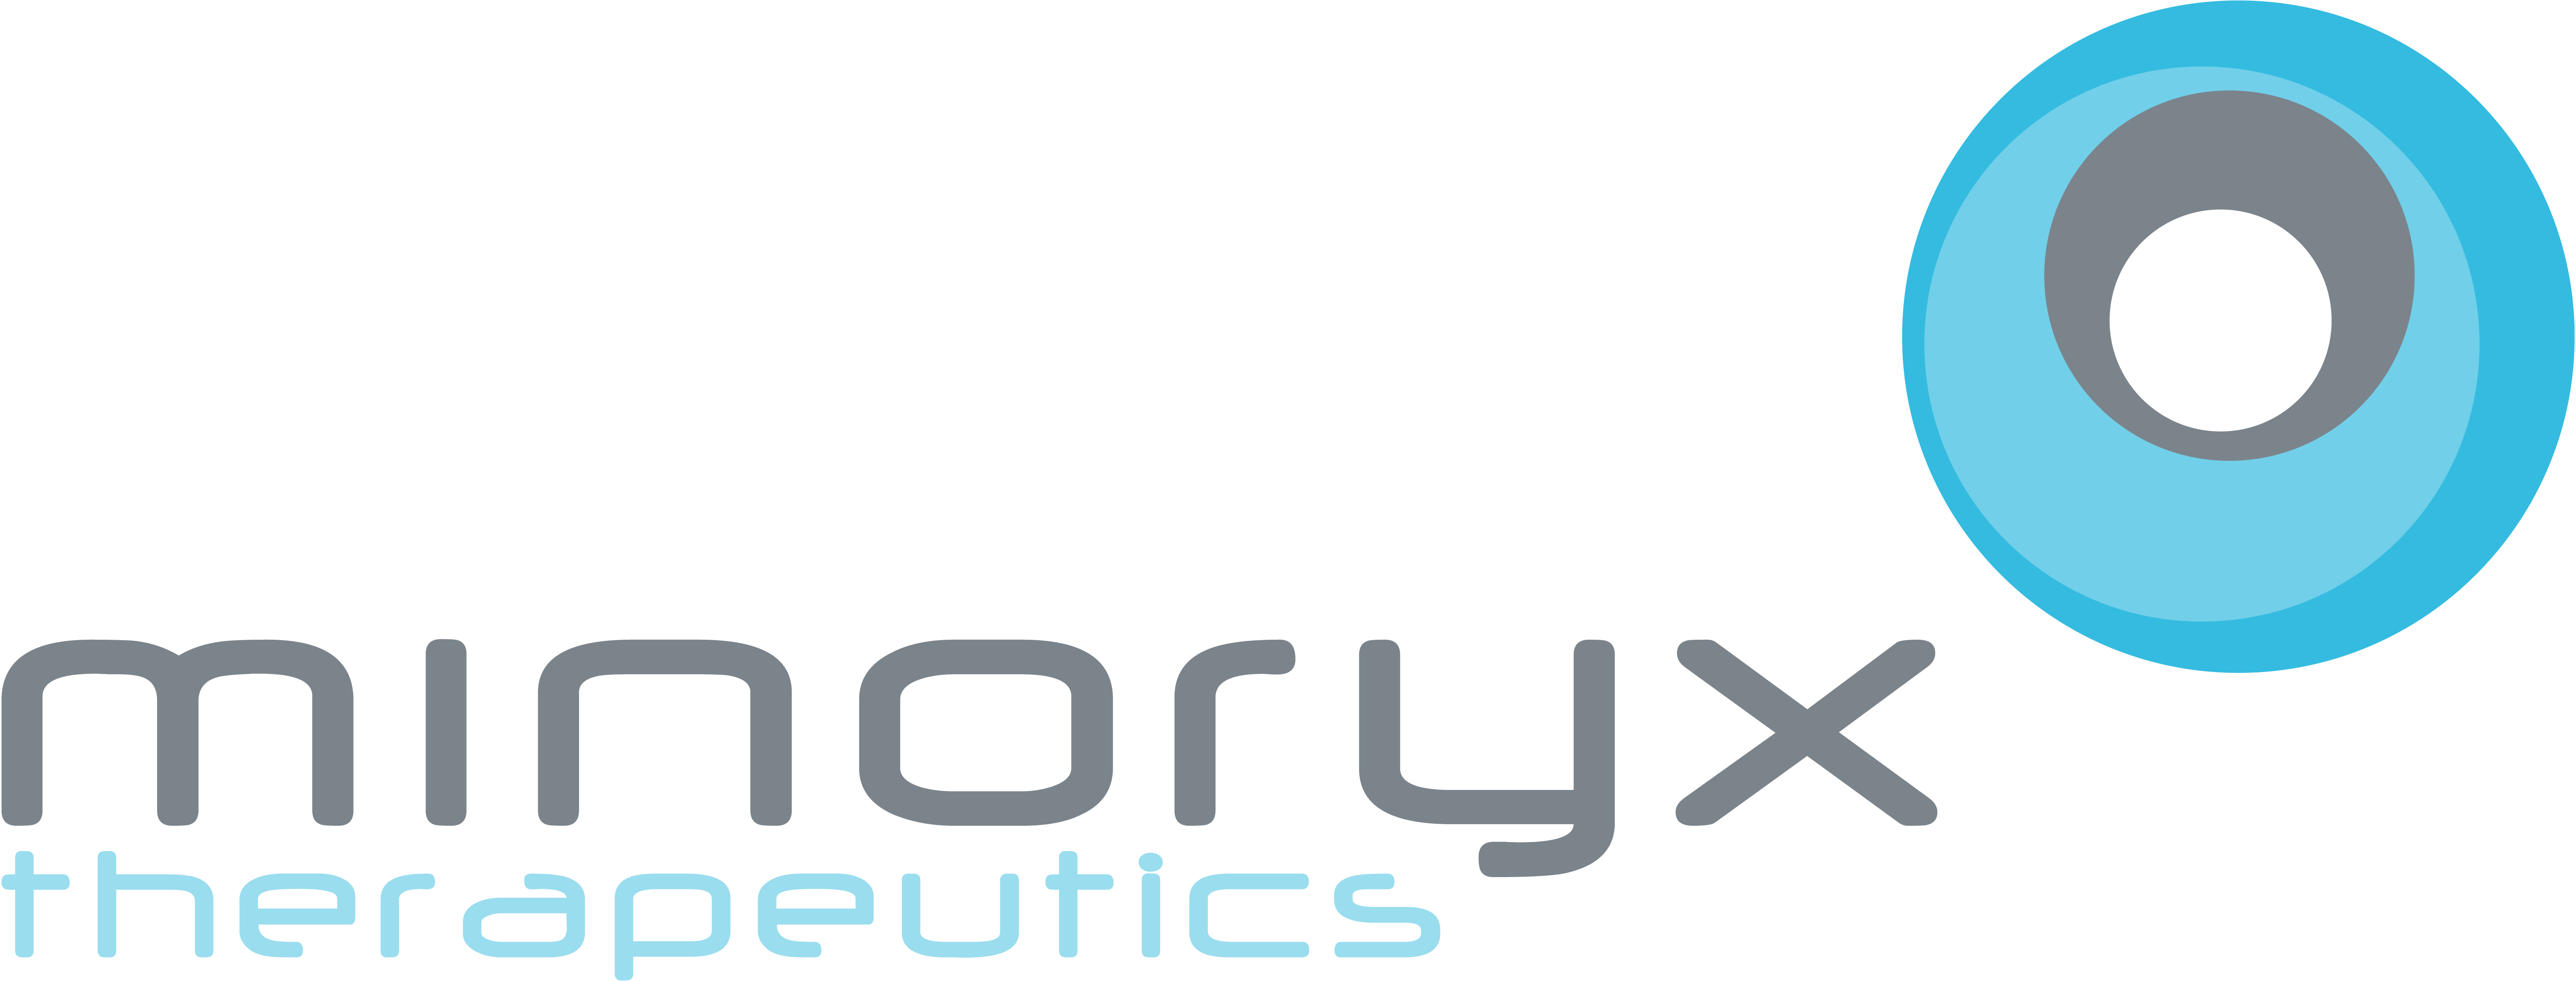 MINORYX logotip.jpg